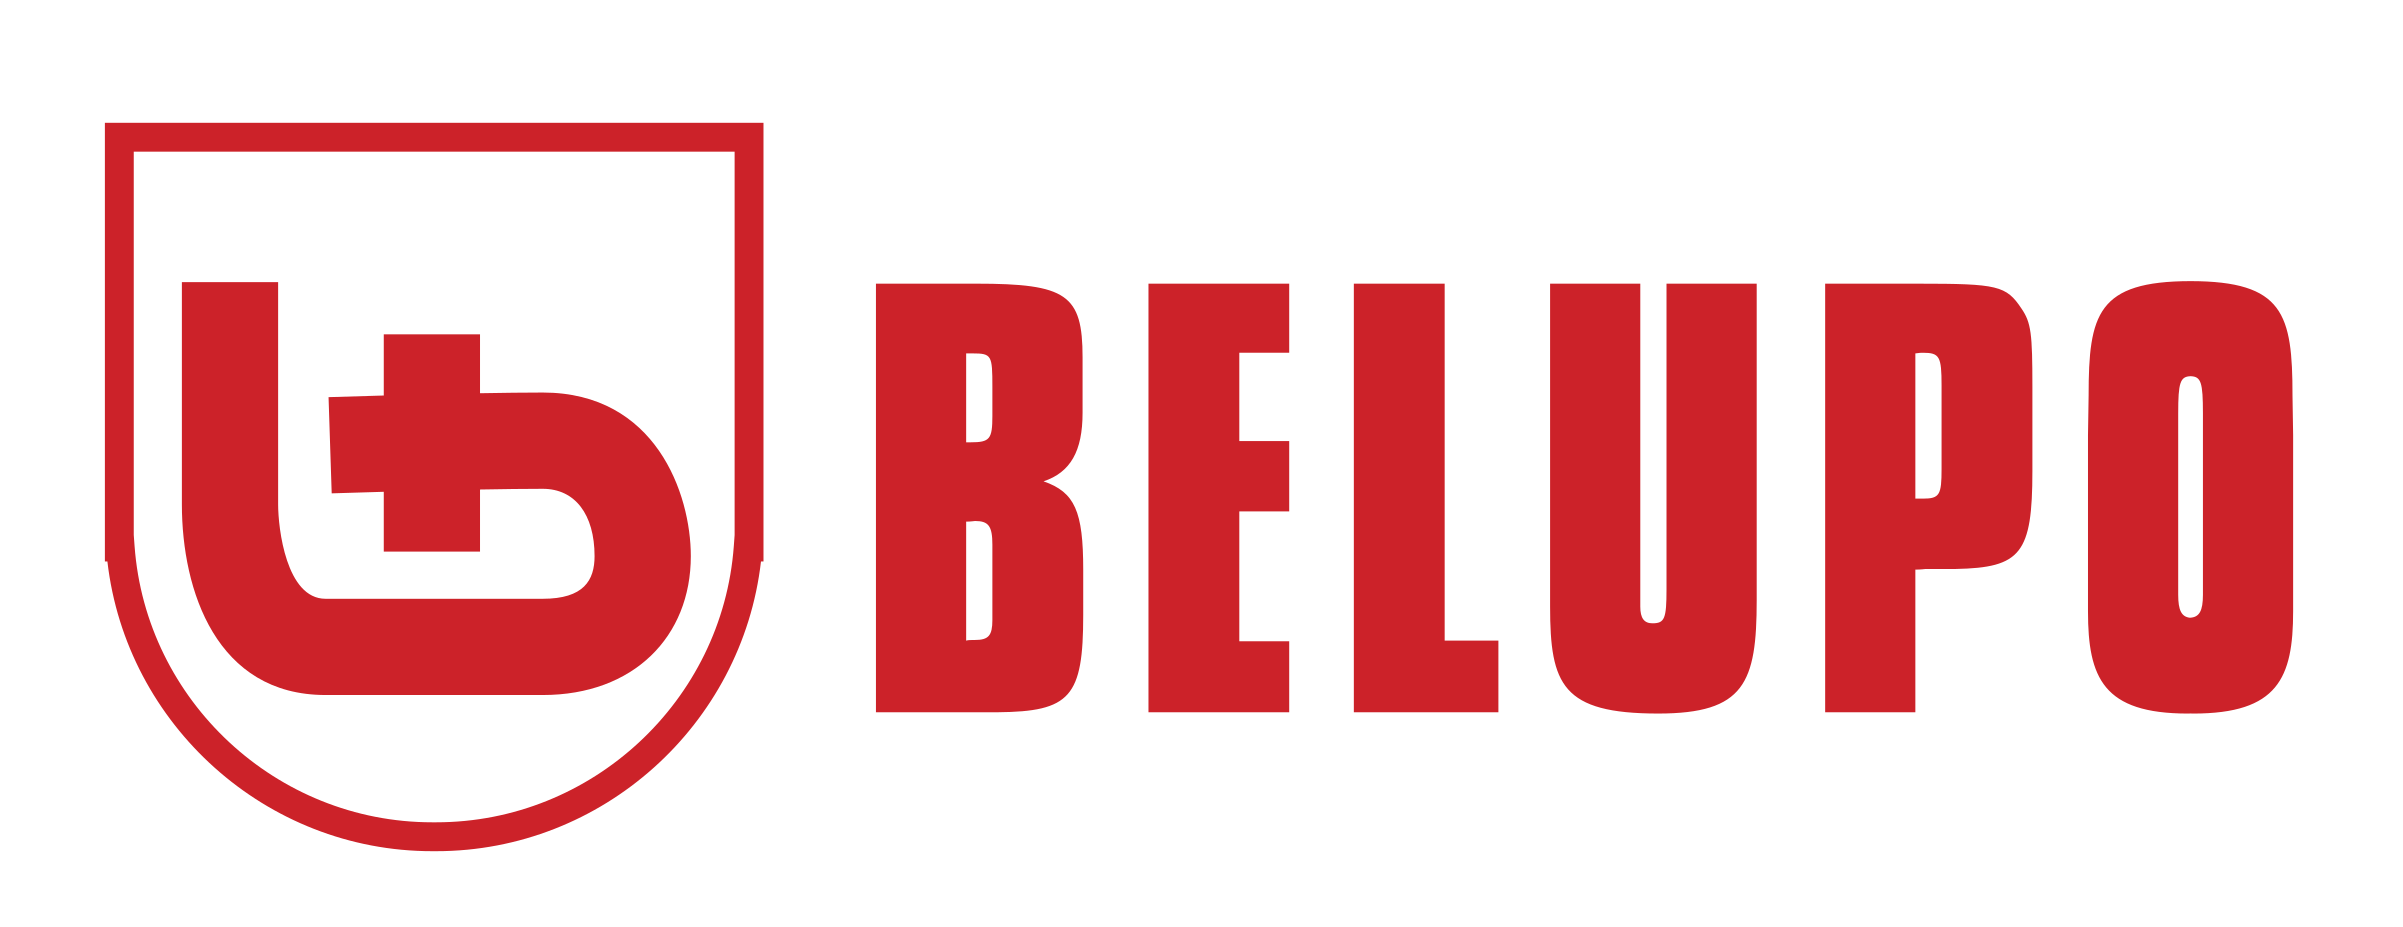 belupo-logo-png-transparent